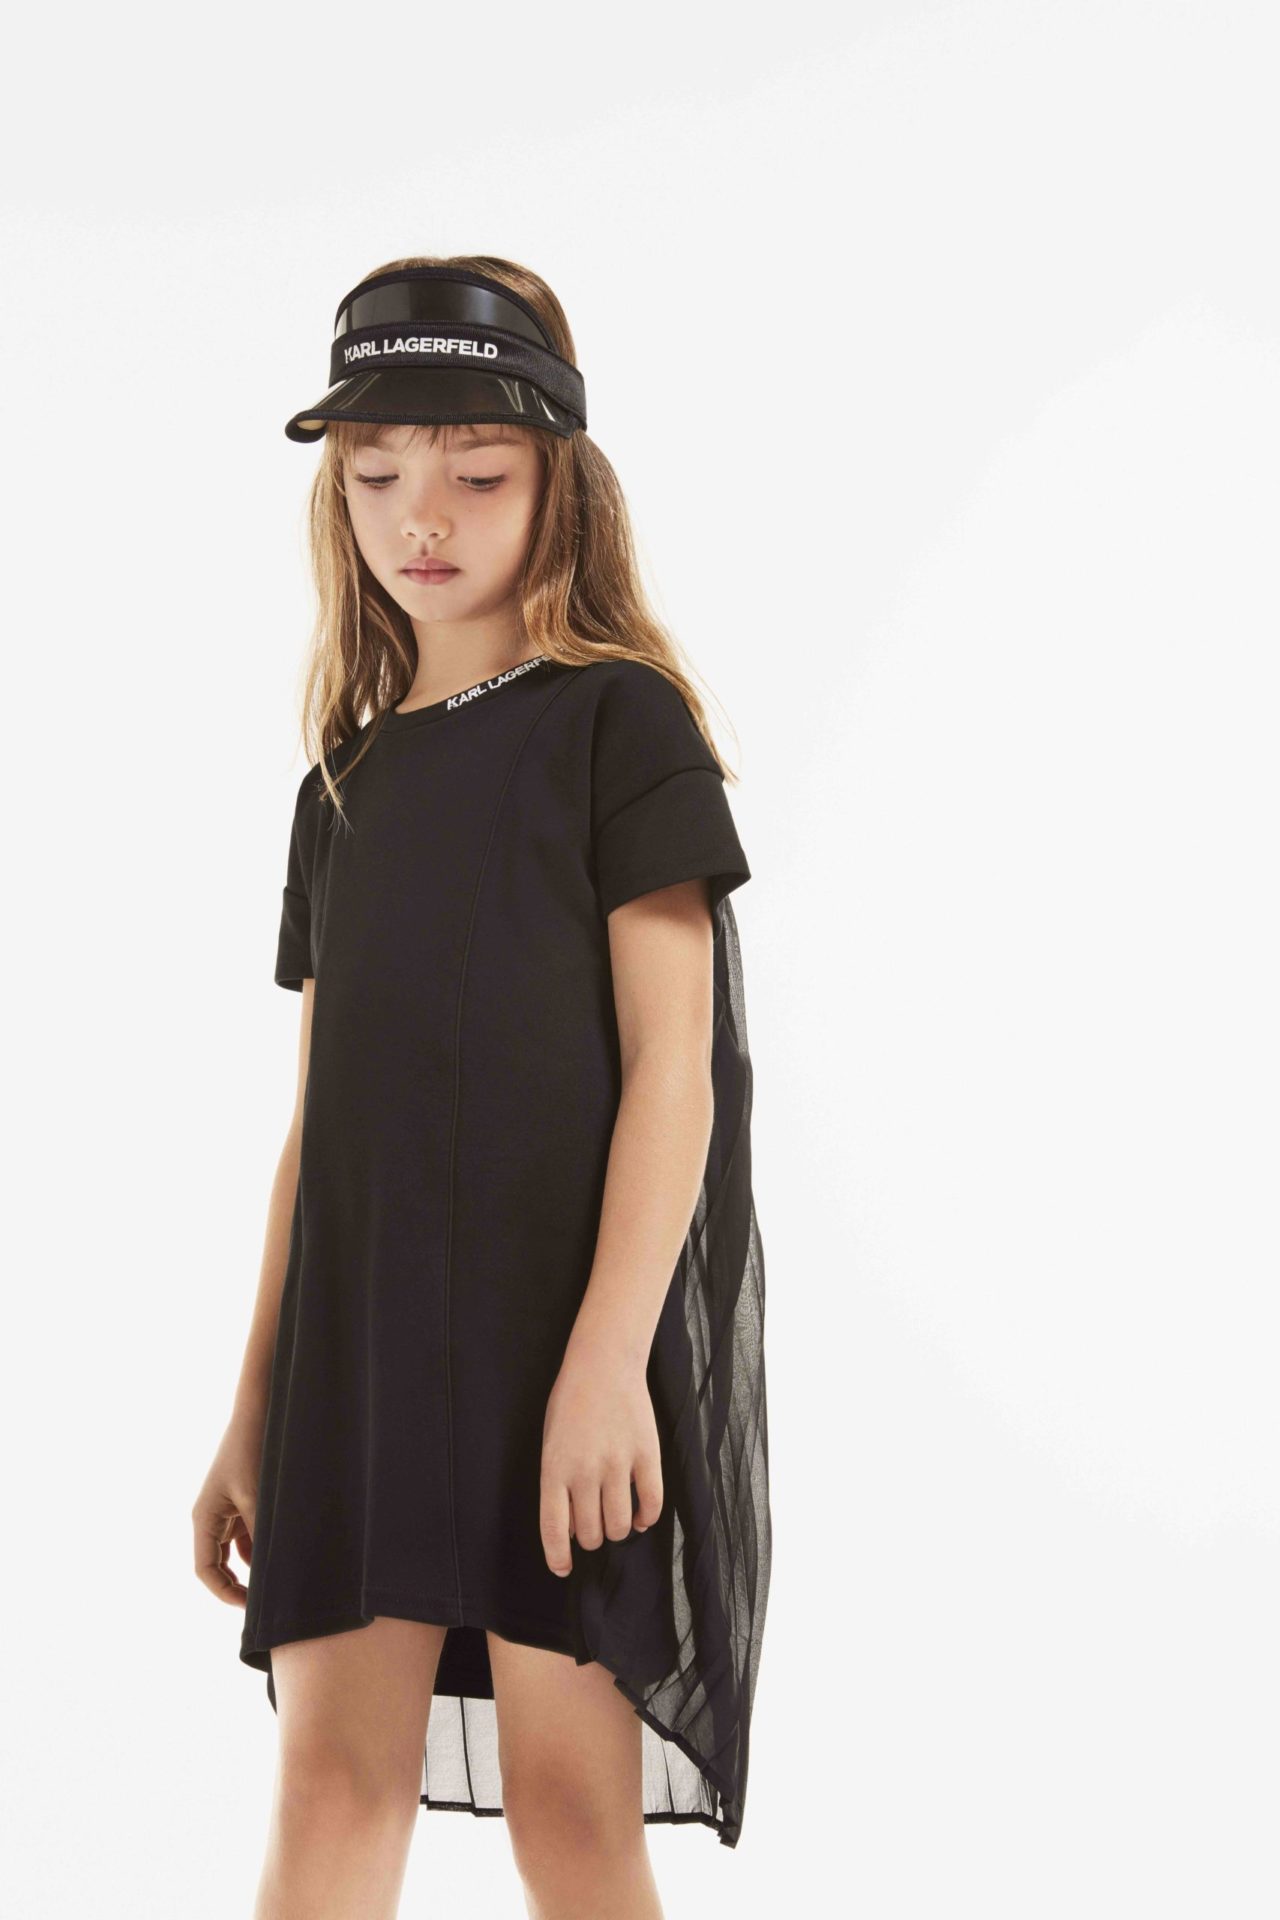 Karl Lagerfeld kidswear for spring/summer 2019